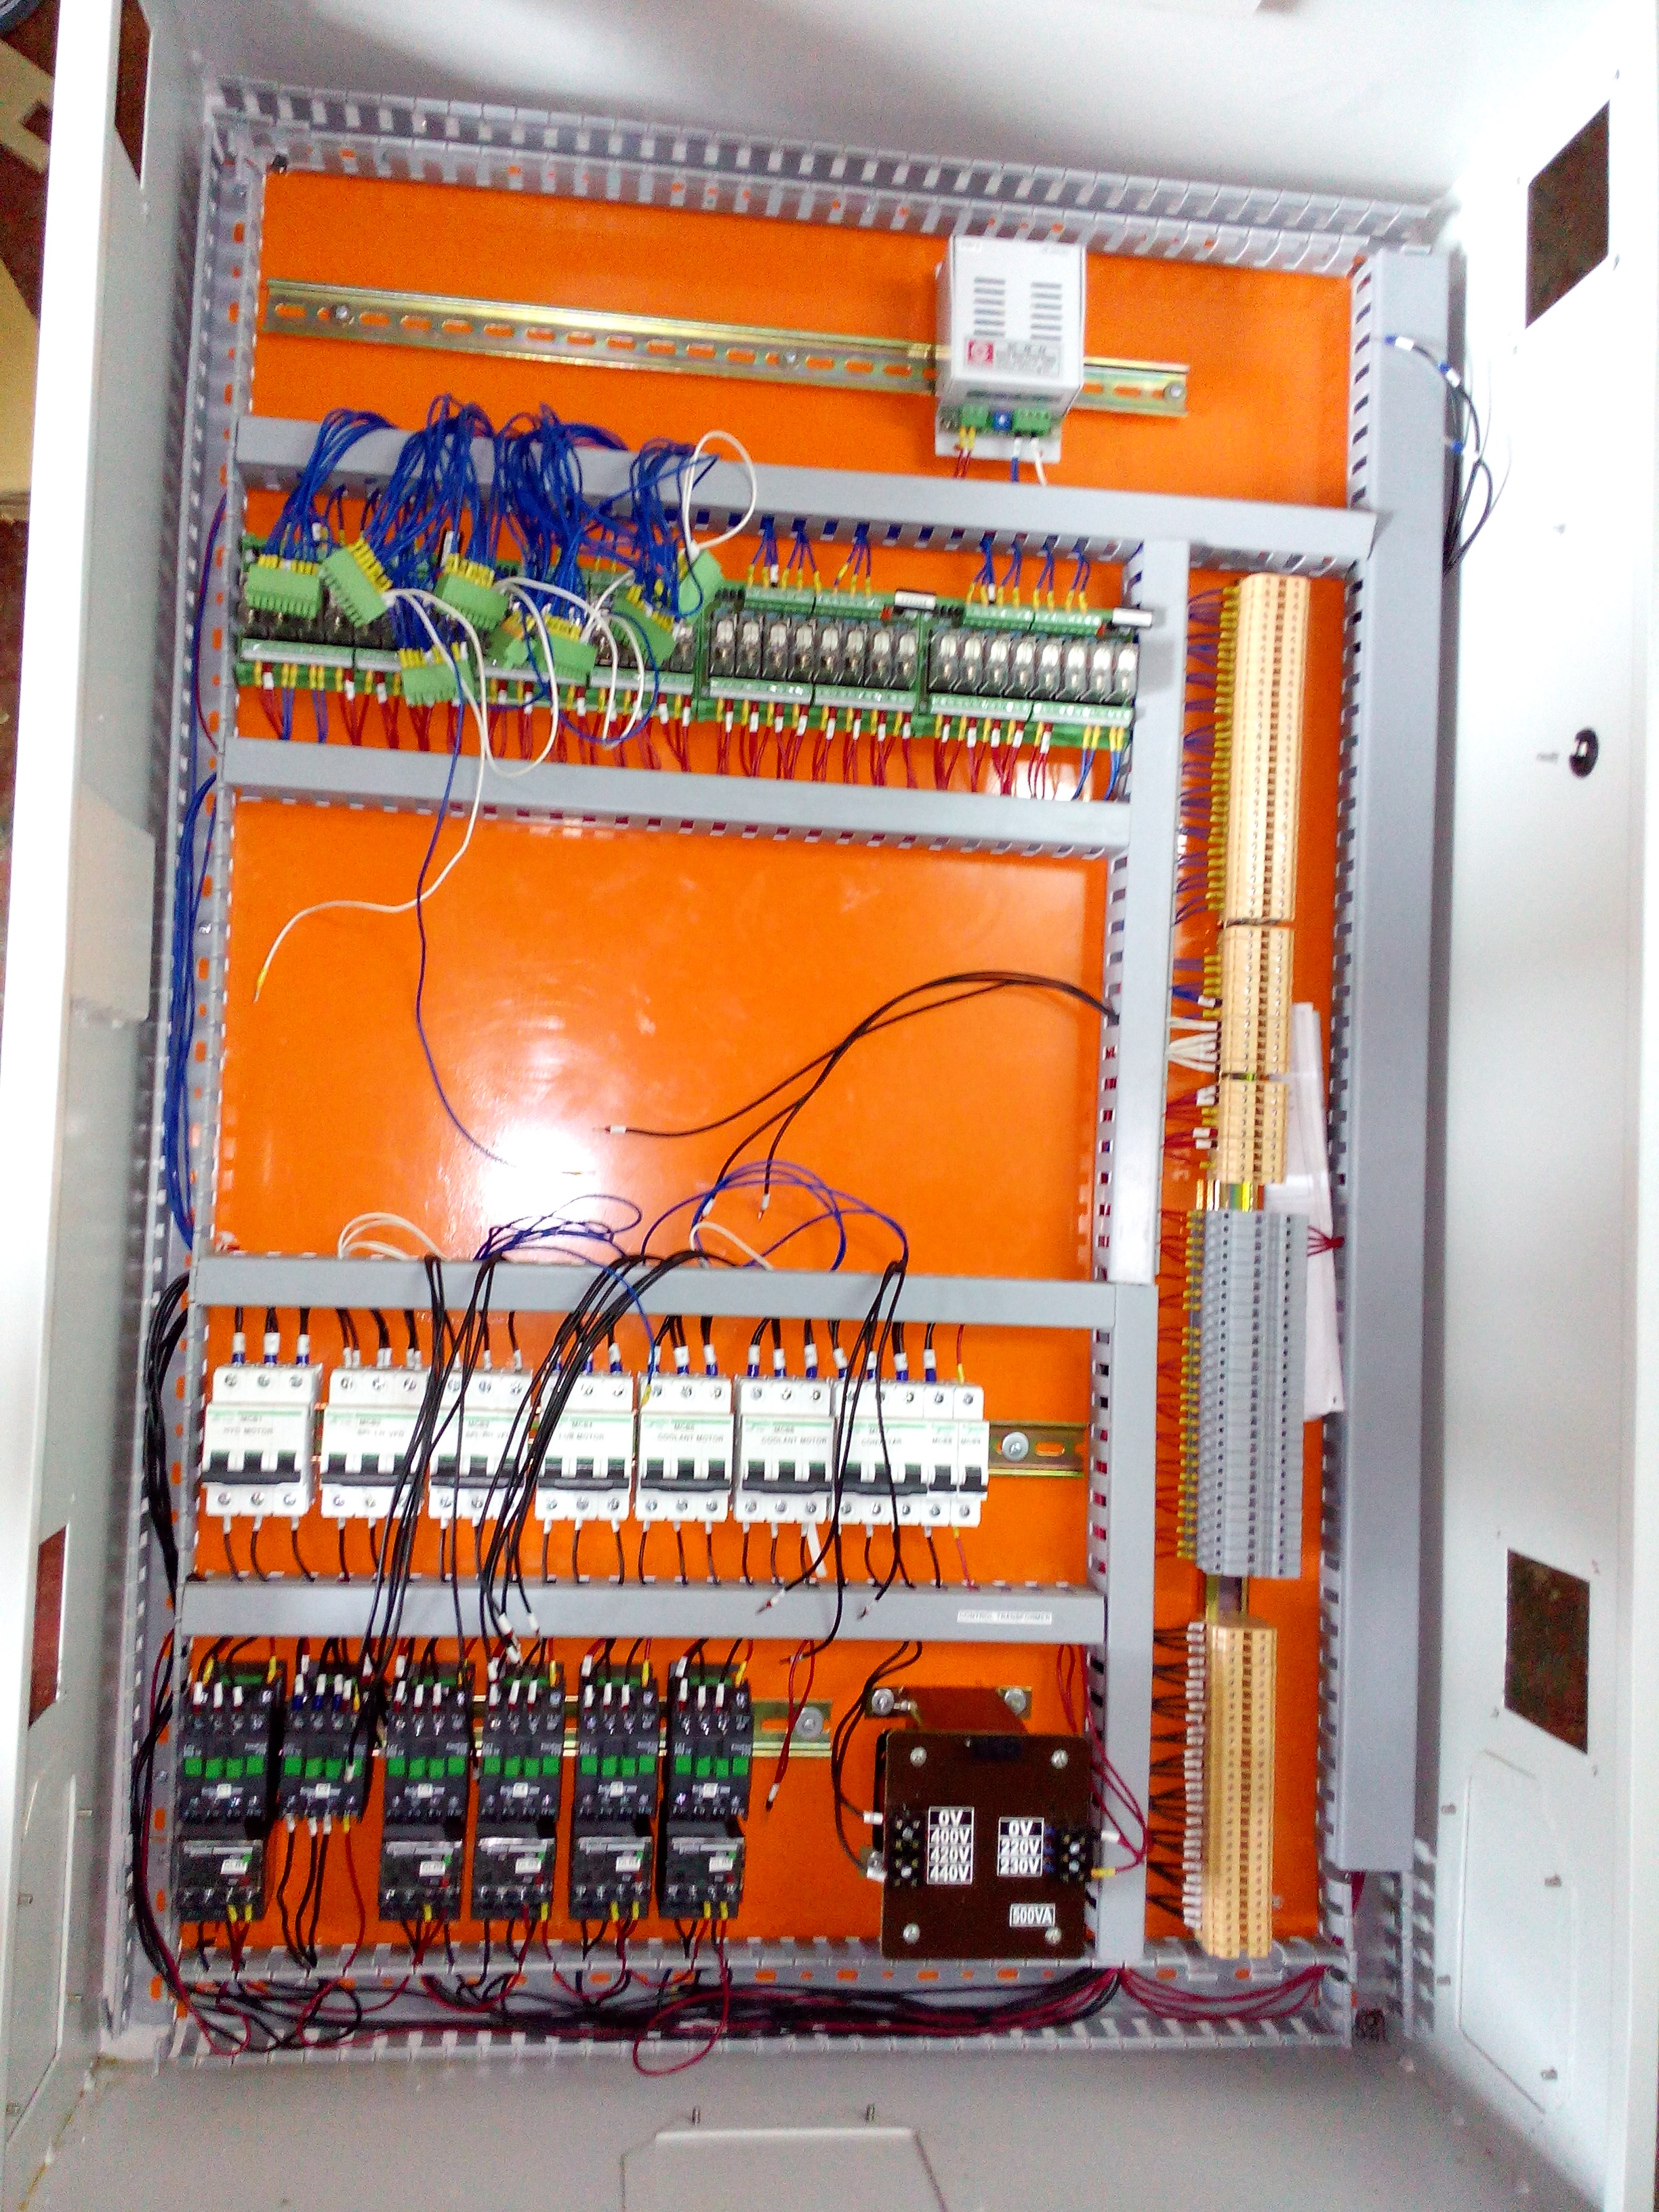 Spm control panel 